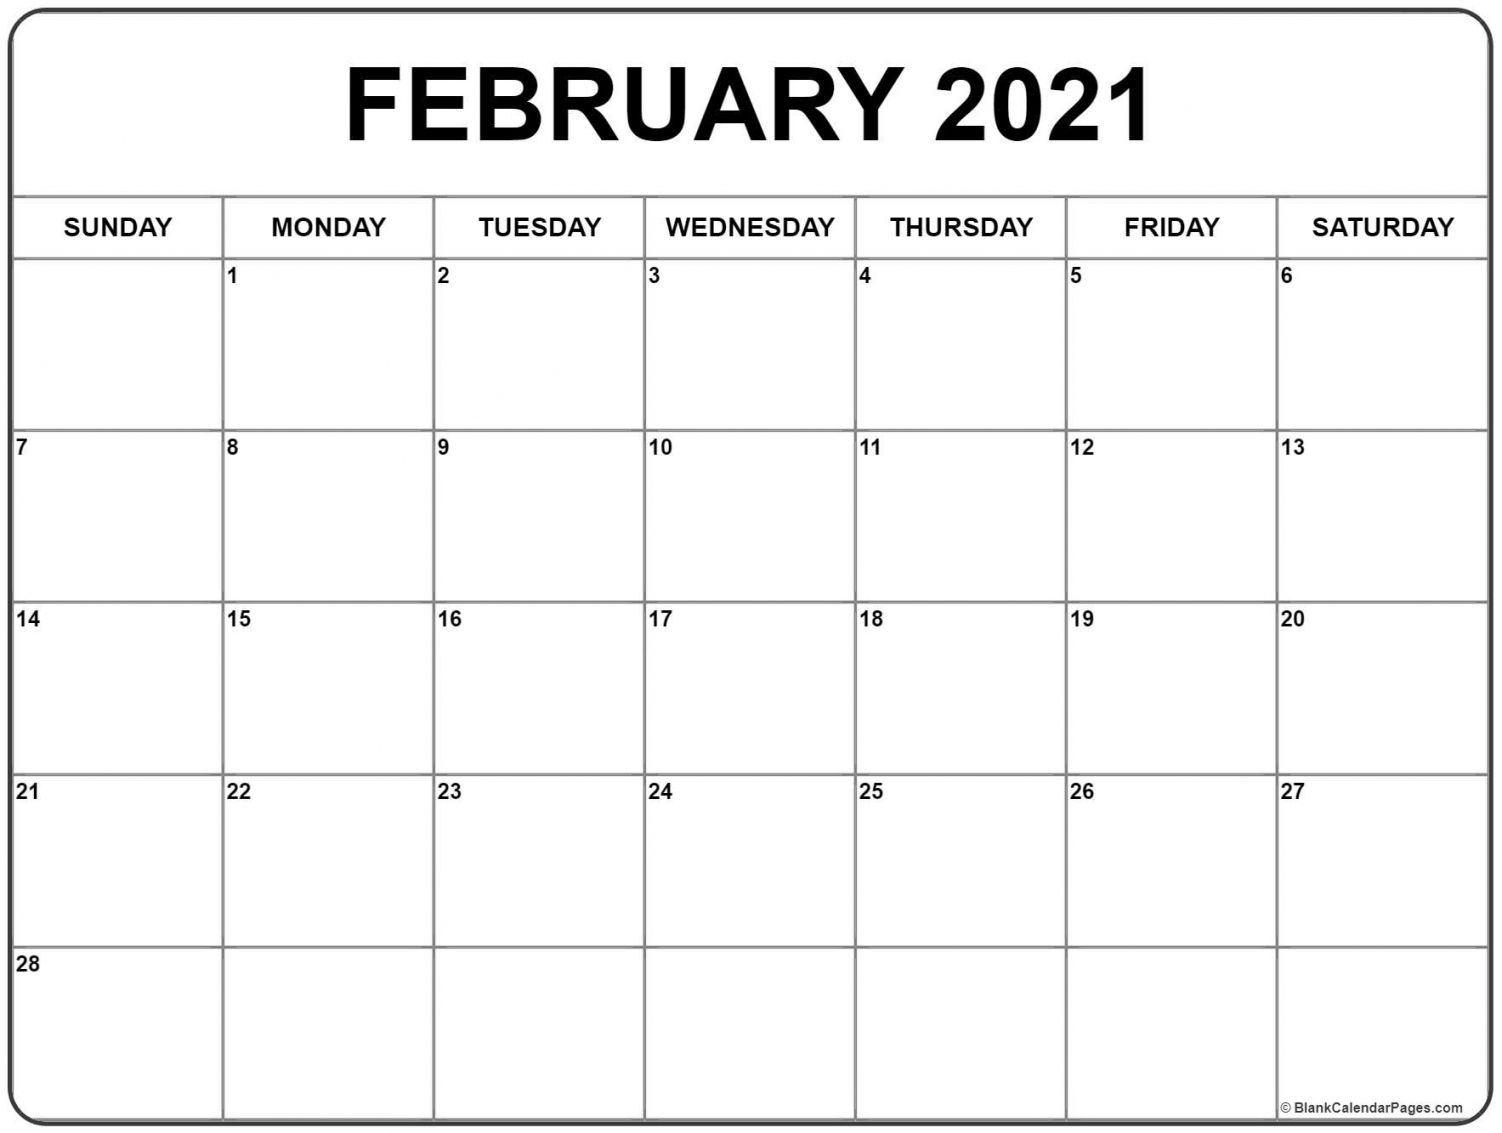 February 2021 Calendar Templates In 2020 | Calendar